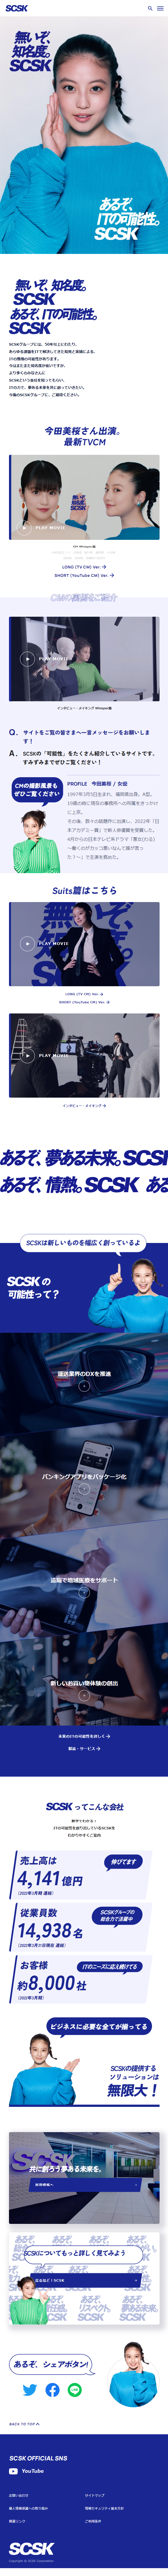 SCSK株式会社_sp_1